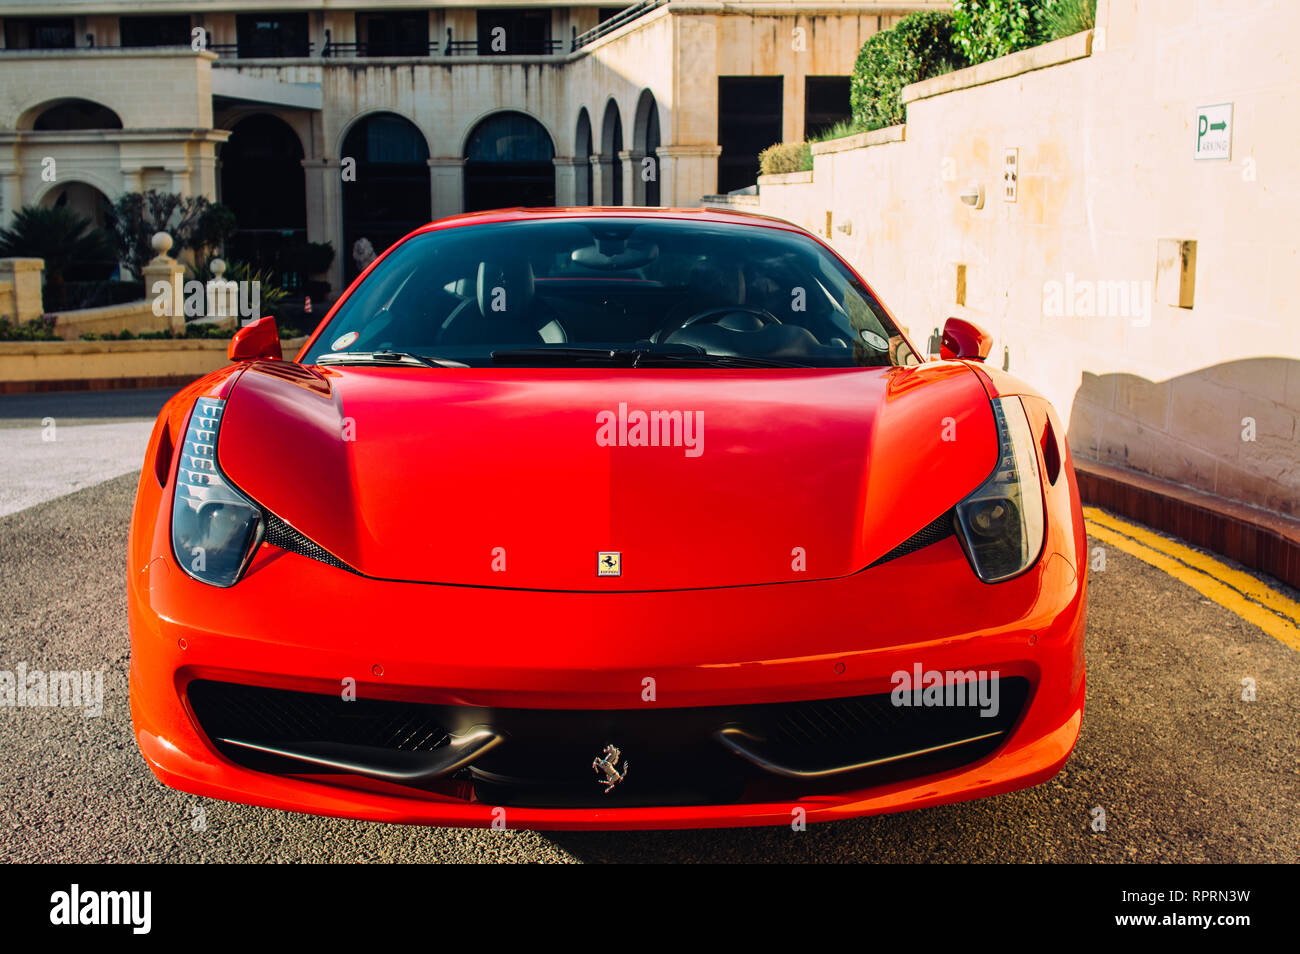 Ferrari show 8 october 2016 in Valletta, Malta, near Grand Hotel Excelsior. Front view of red Ferrari 458 Spider Stock Photo